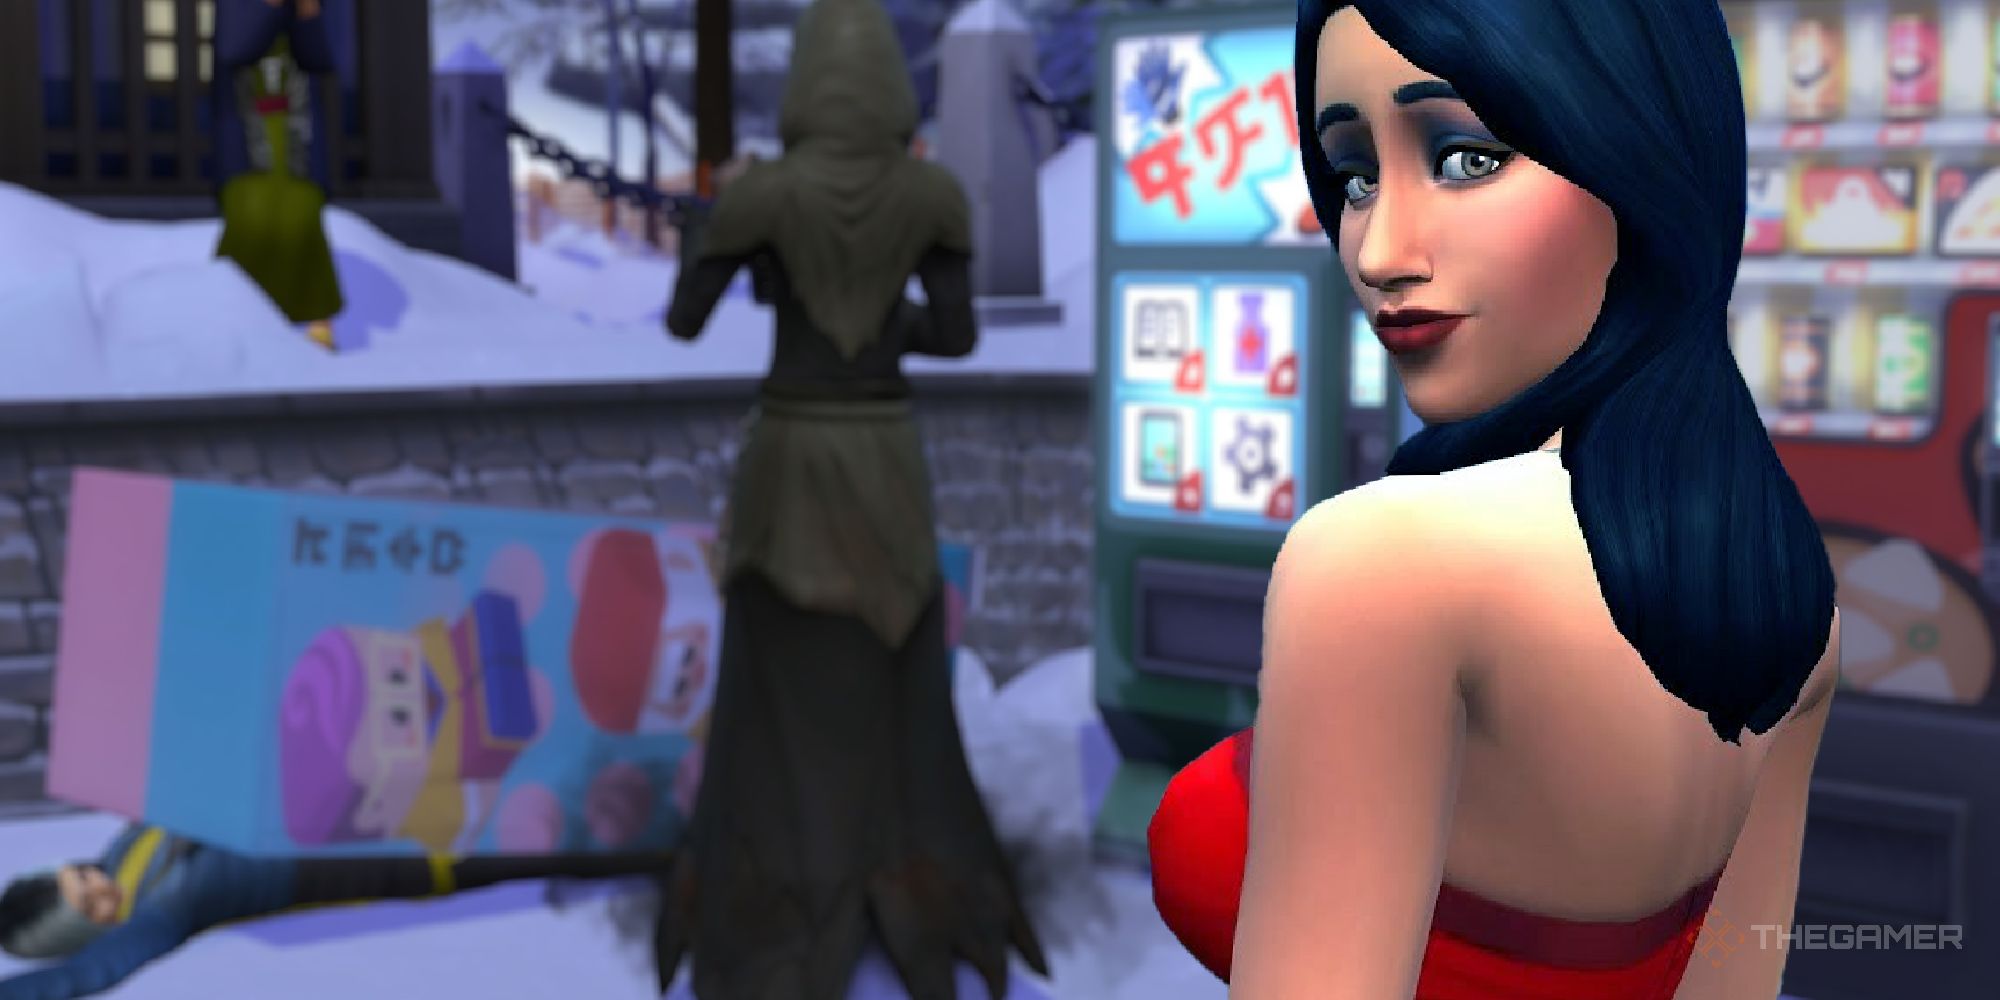 Mod The Sims - Simlish Freezer Bunny for Moschino Sweatshirt